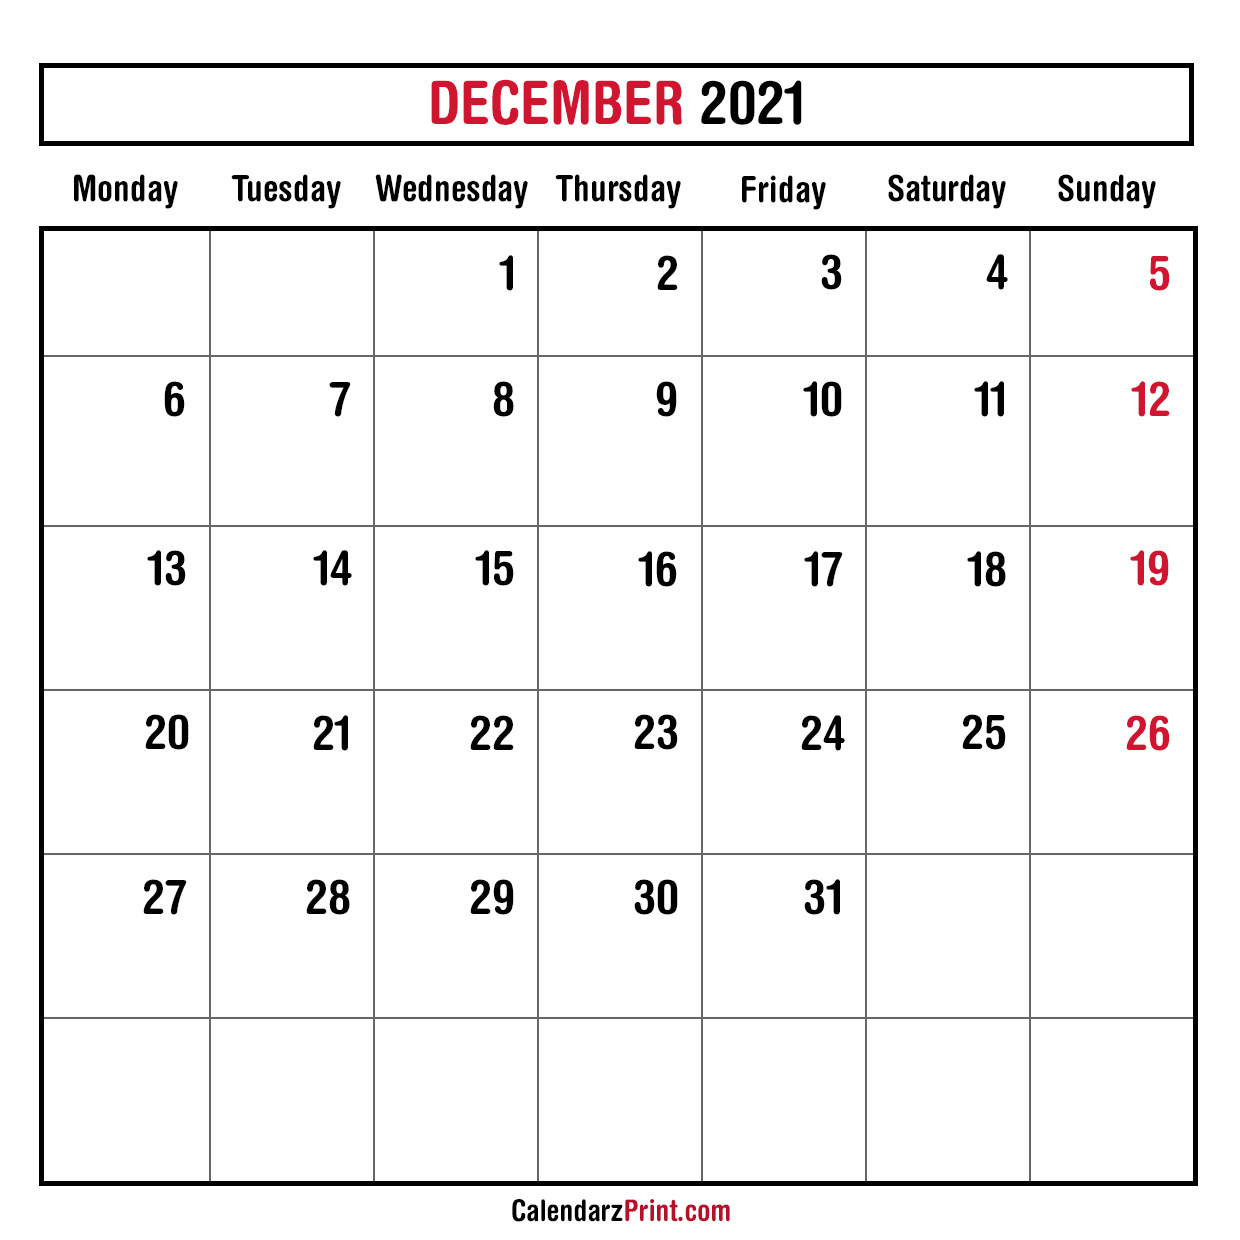 December 2021 Monthly Planner Calendar, Printable Free December 2021 Monthly Calendar